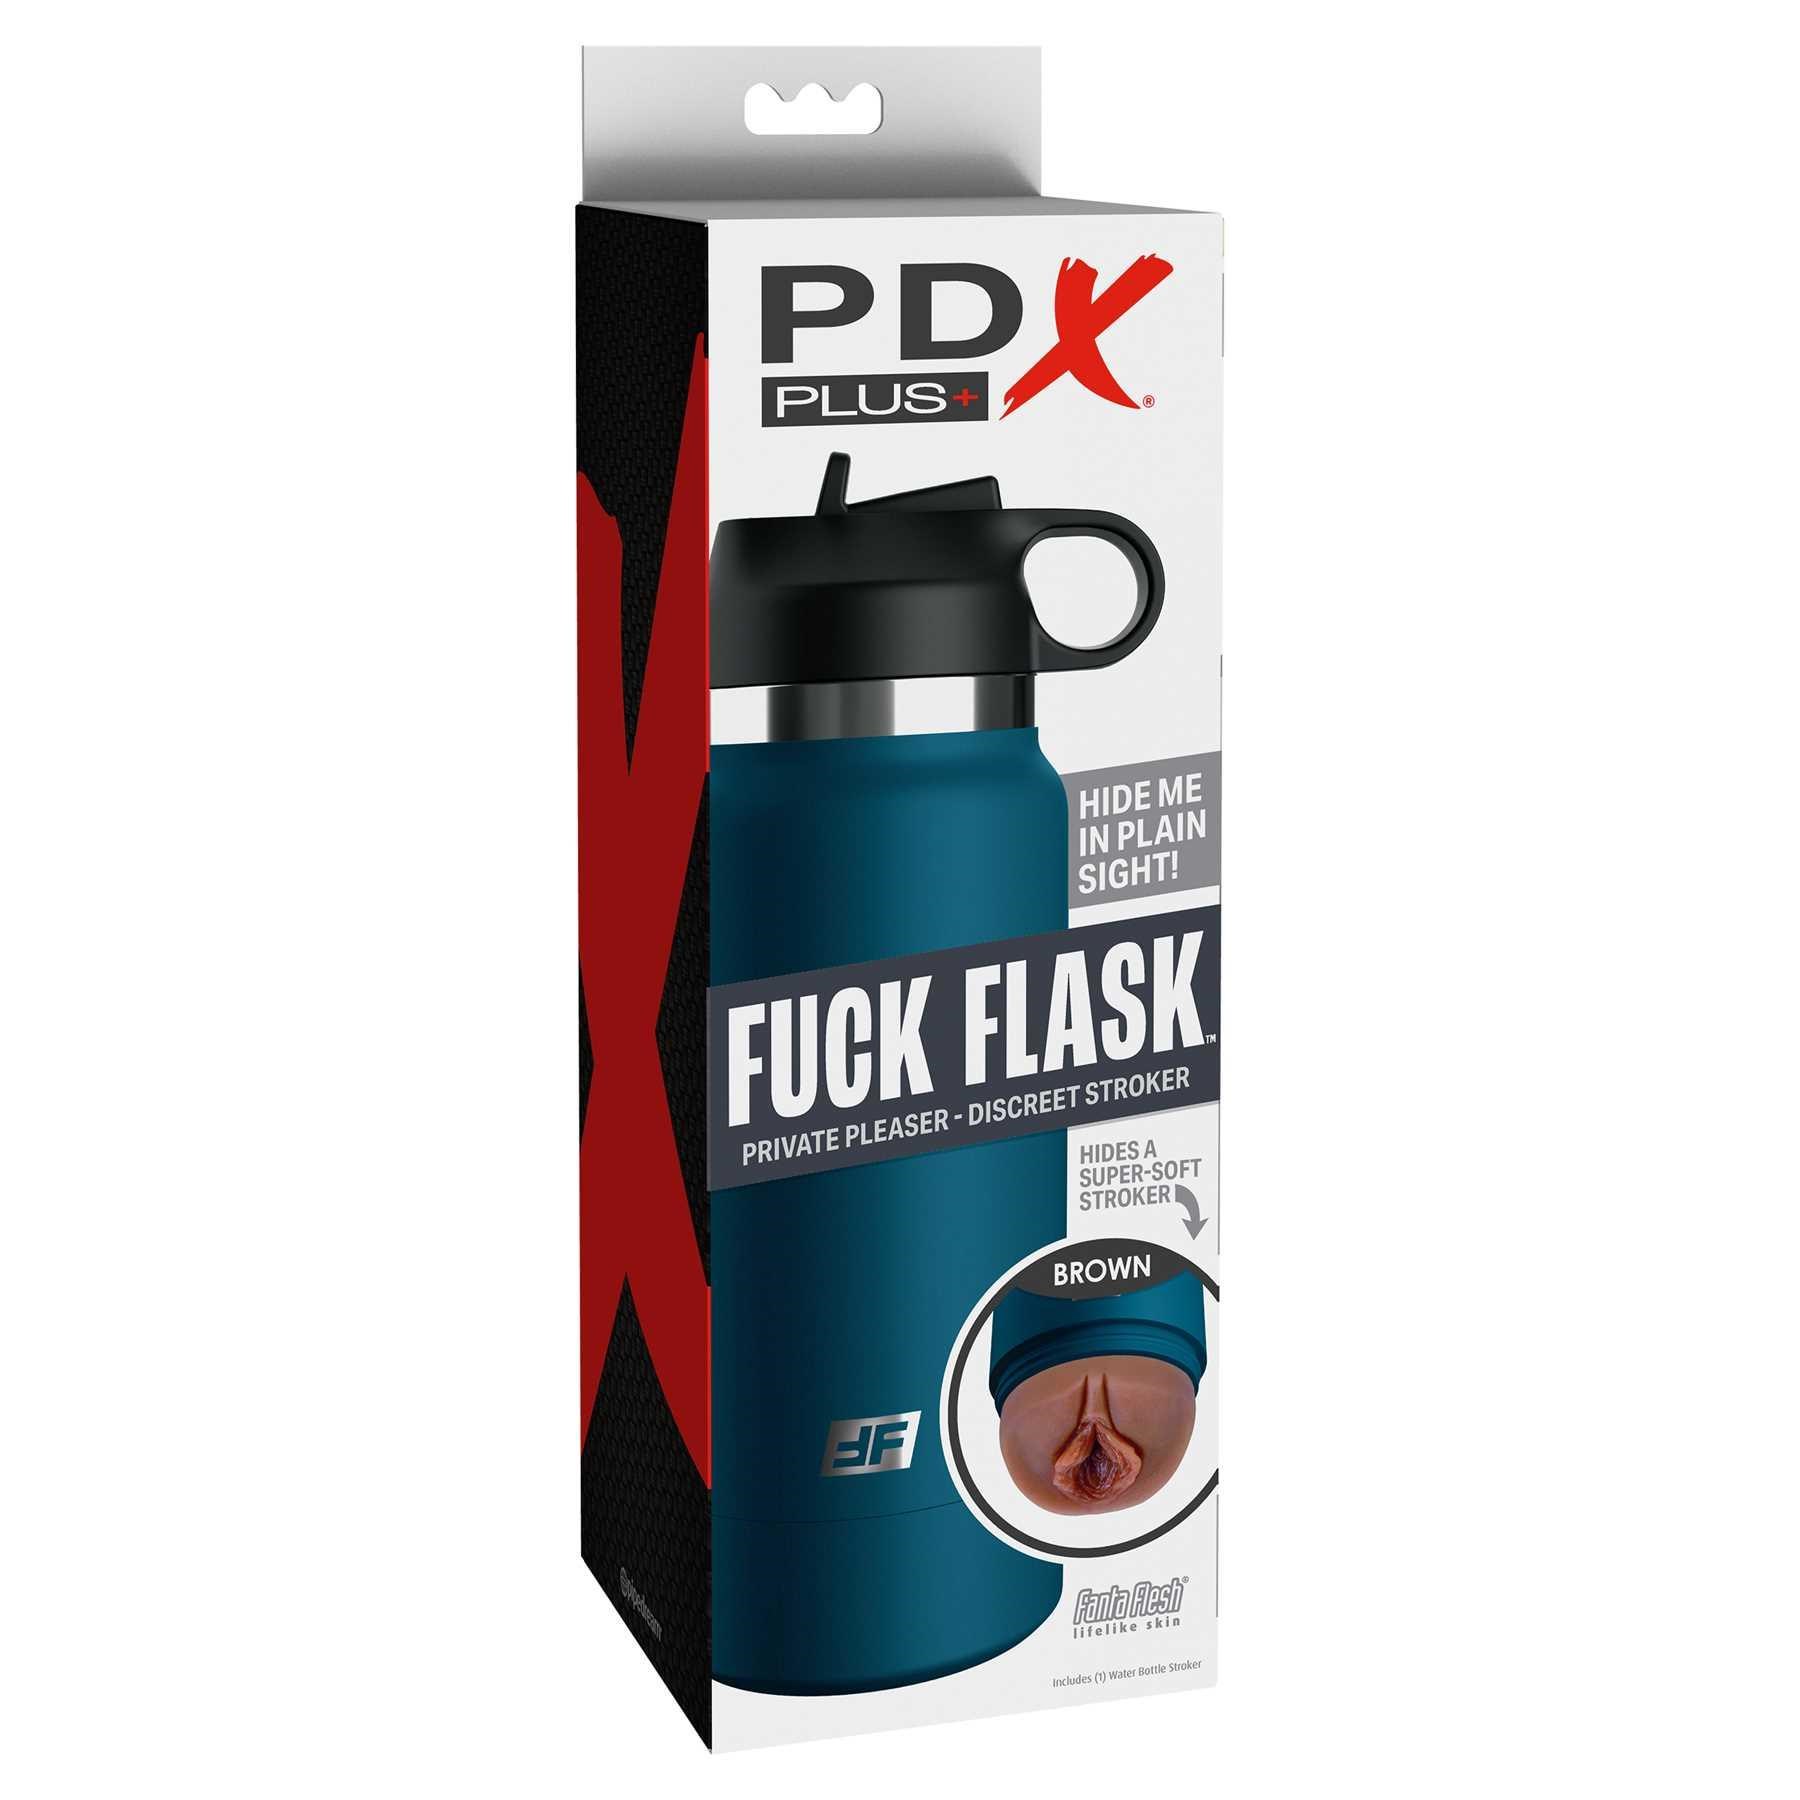 PDX Plus F*ck Flask Stroker - Private Pleaser box